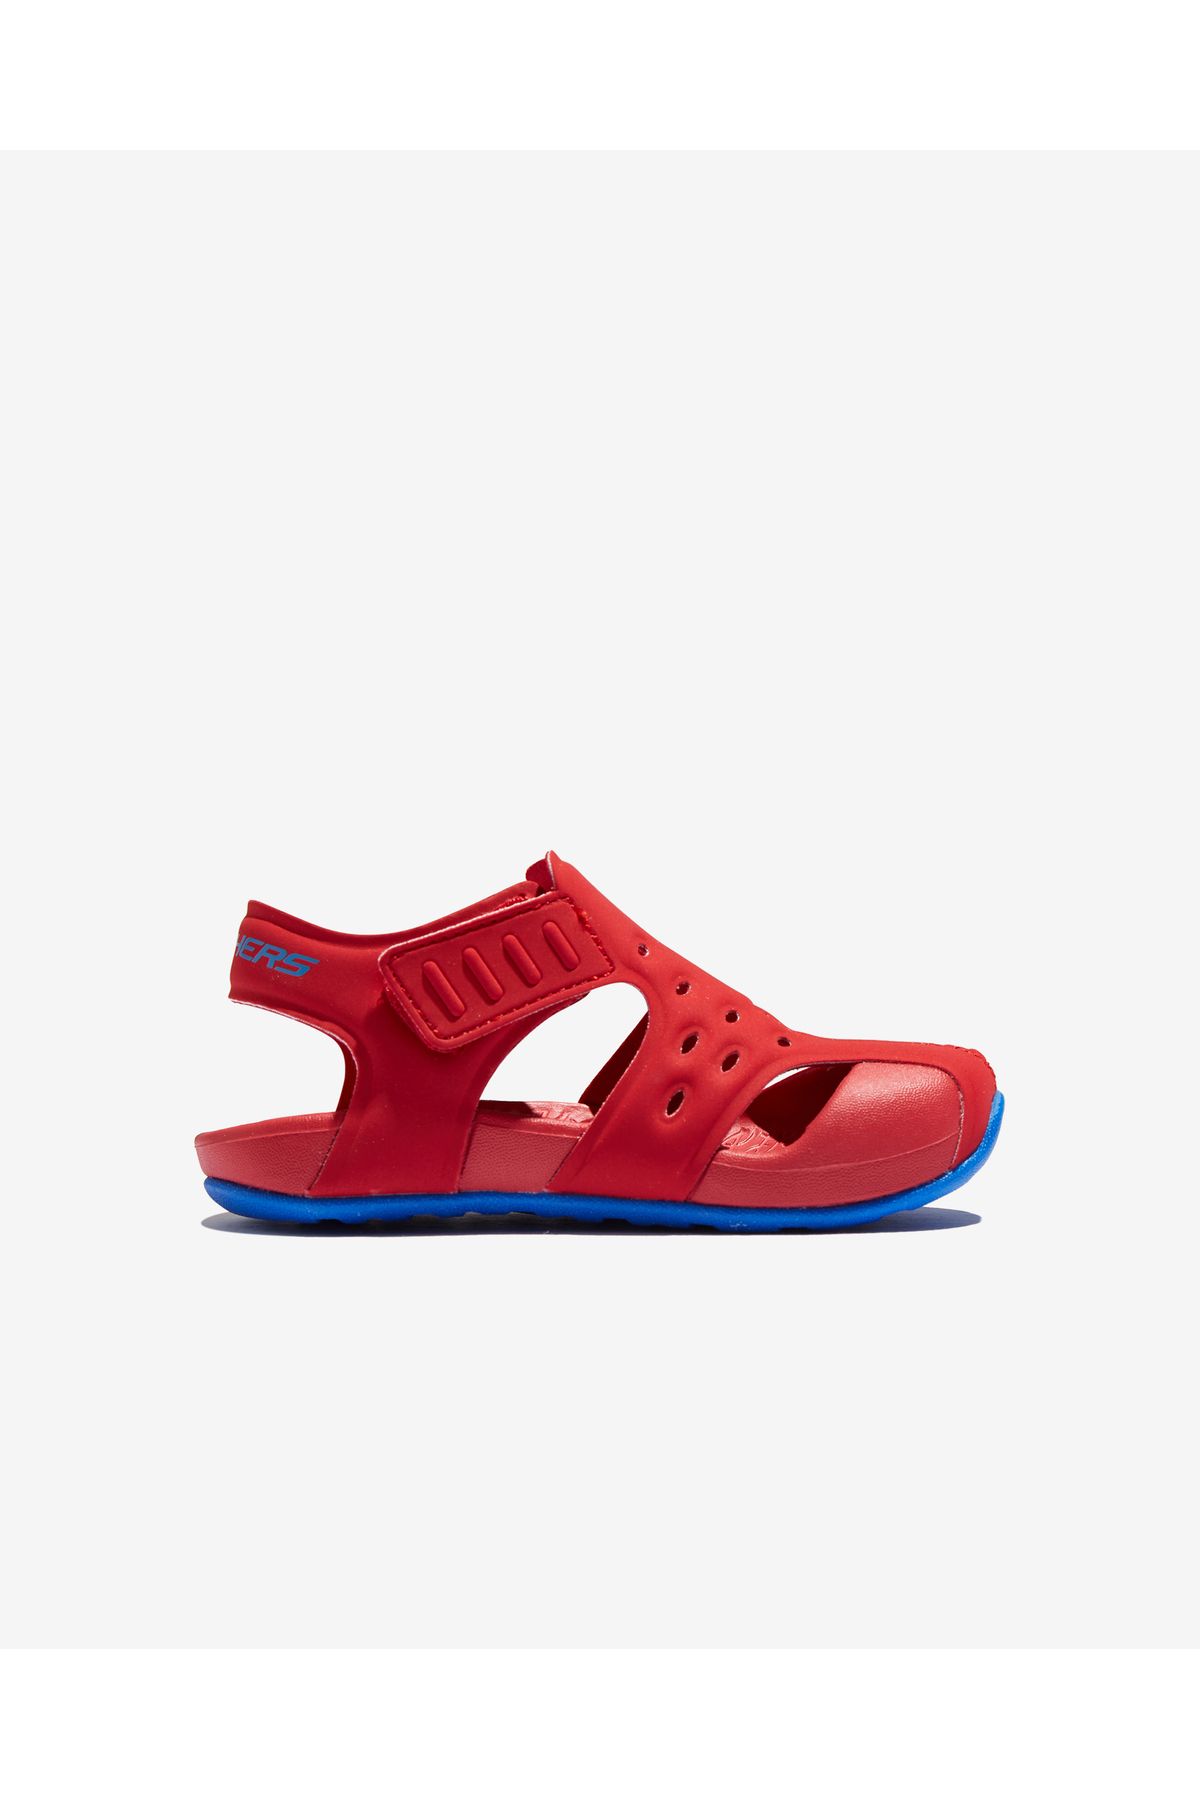 Skechers Side Wave Boy Sandals Red 92330n RDBL